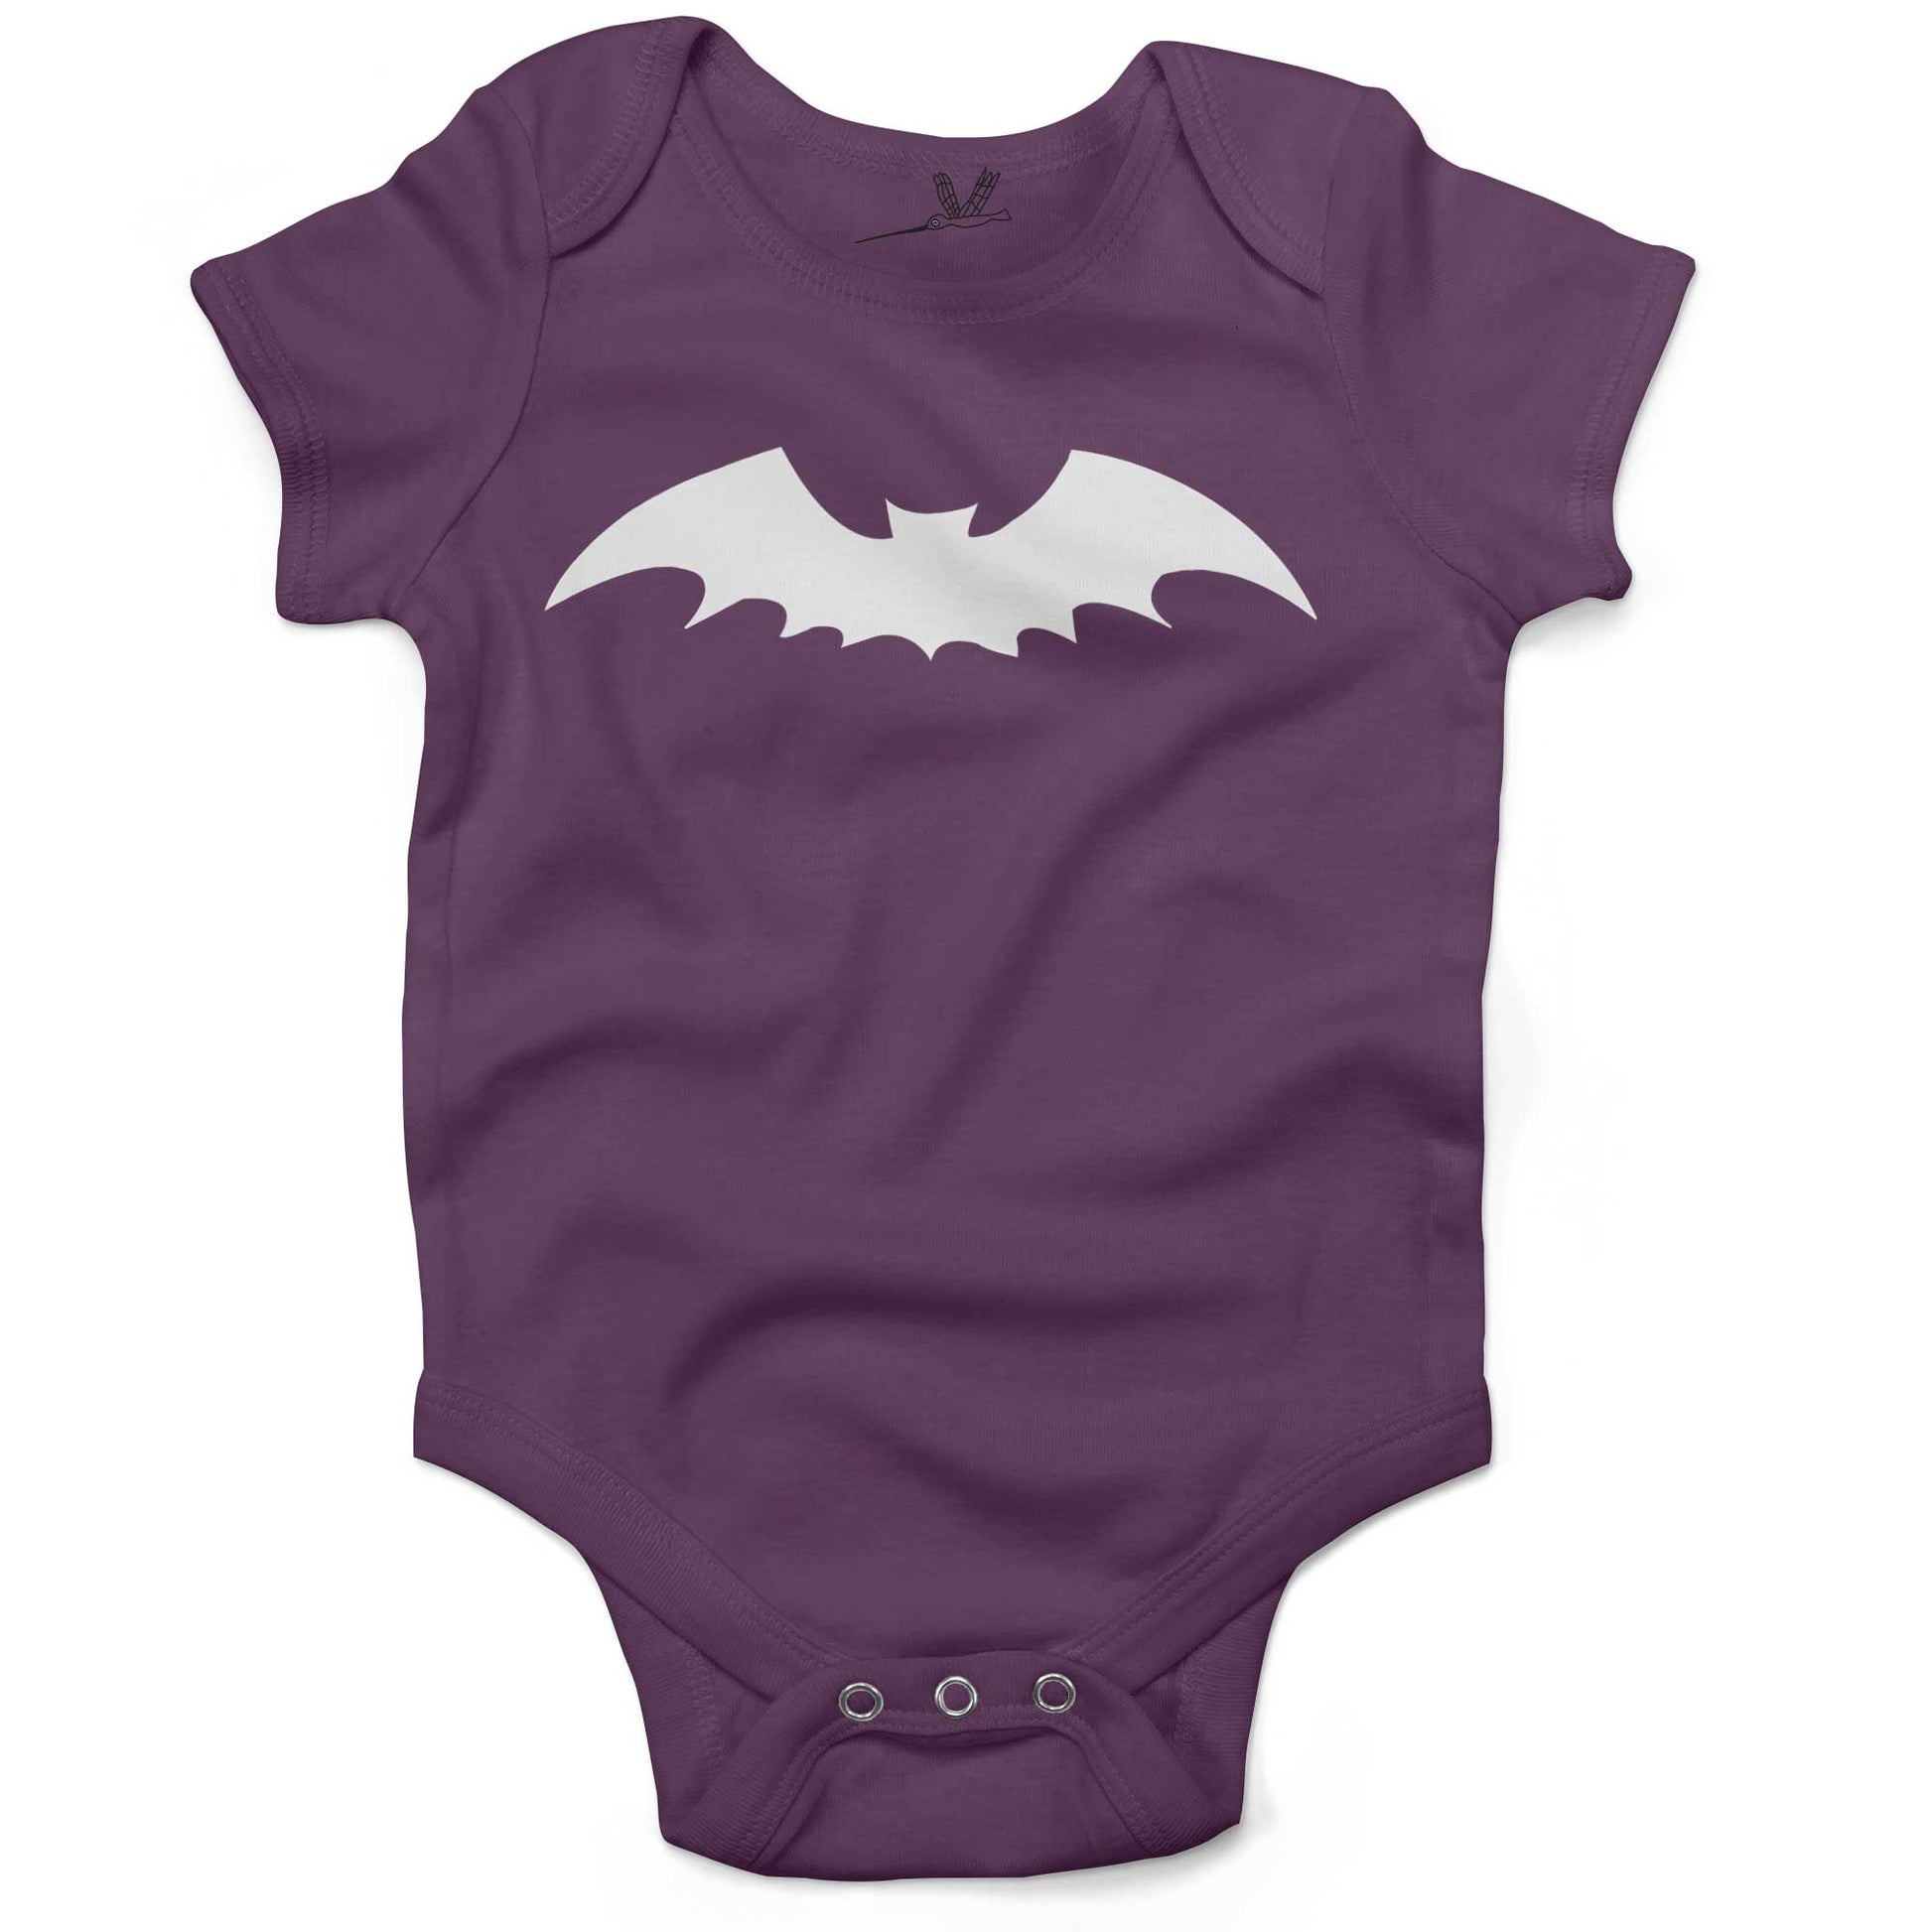 Gothic Bat Infant Bodysuit or Raglan Tee-Organic Purple-3-6 months